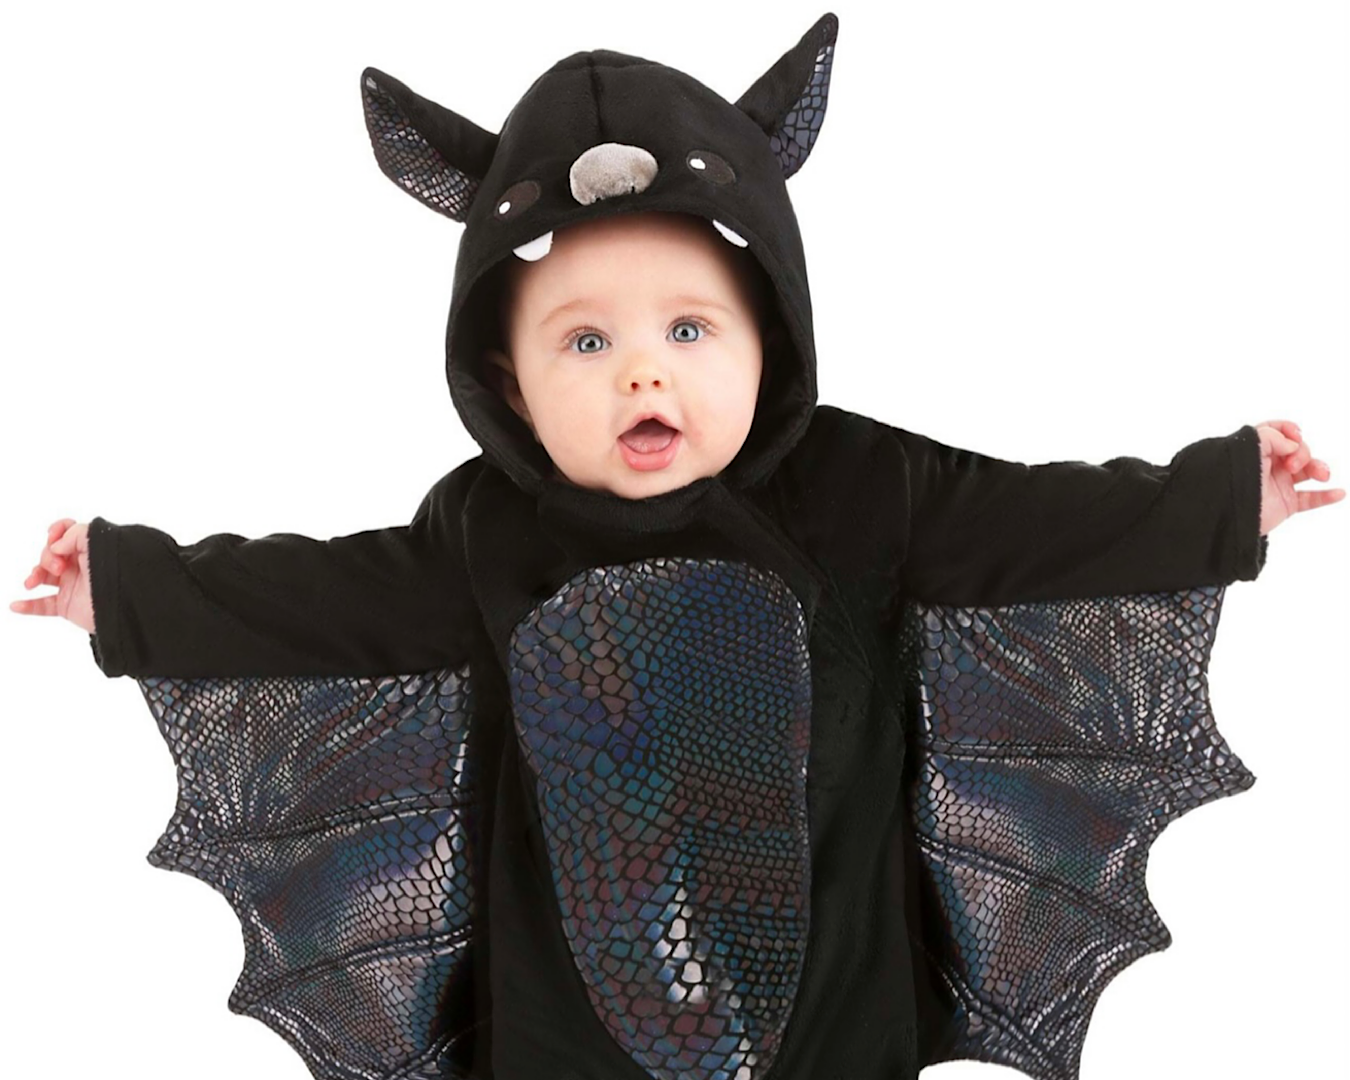 A cute toddler dressed in a bat Halloween costume. 